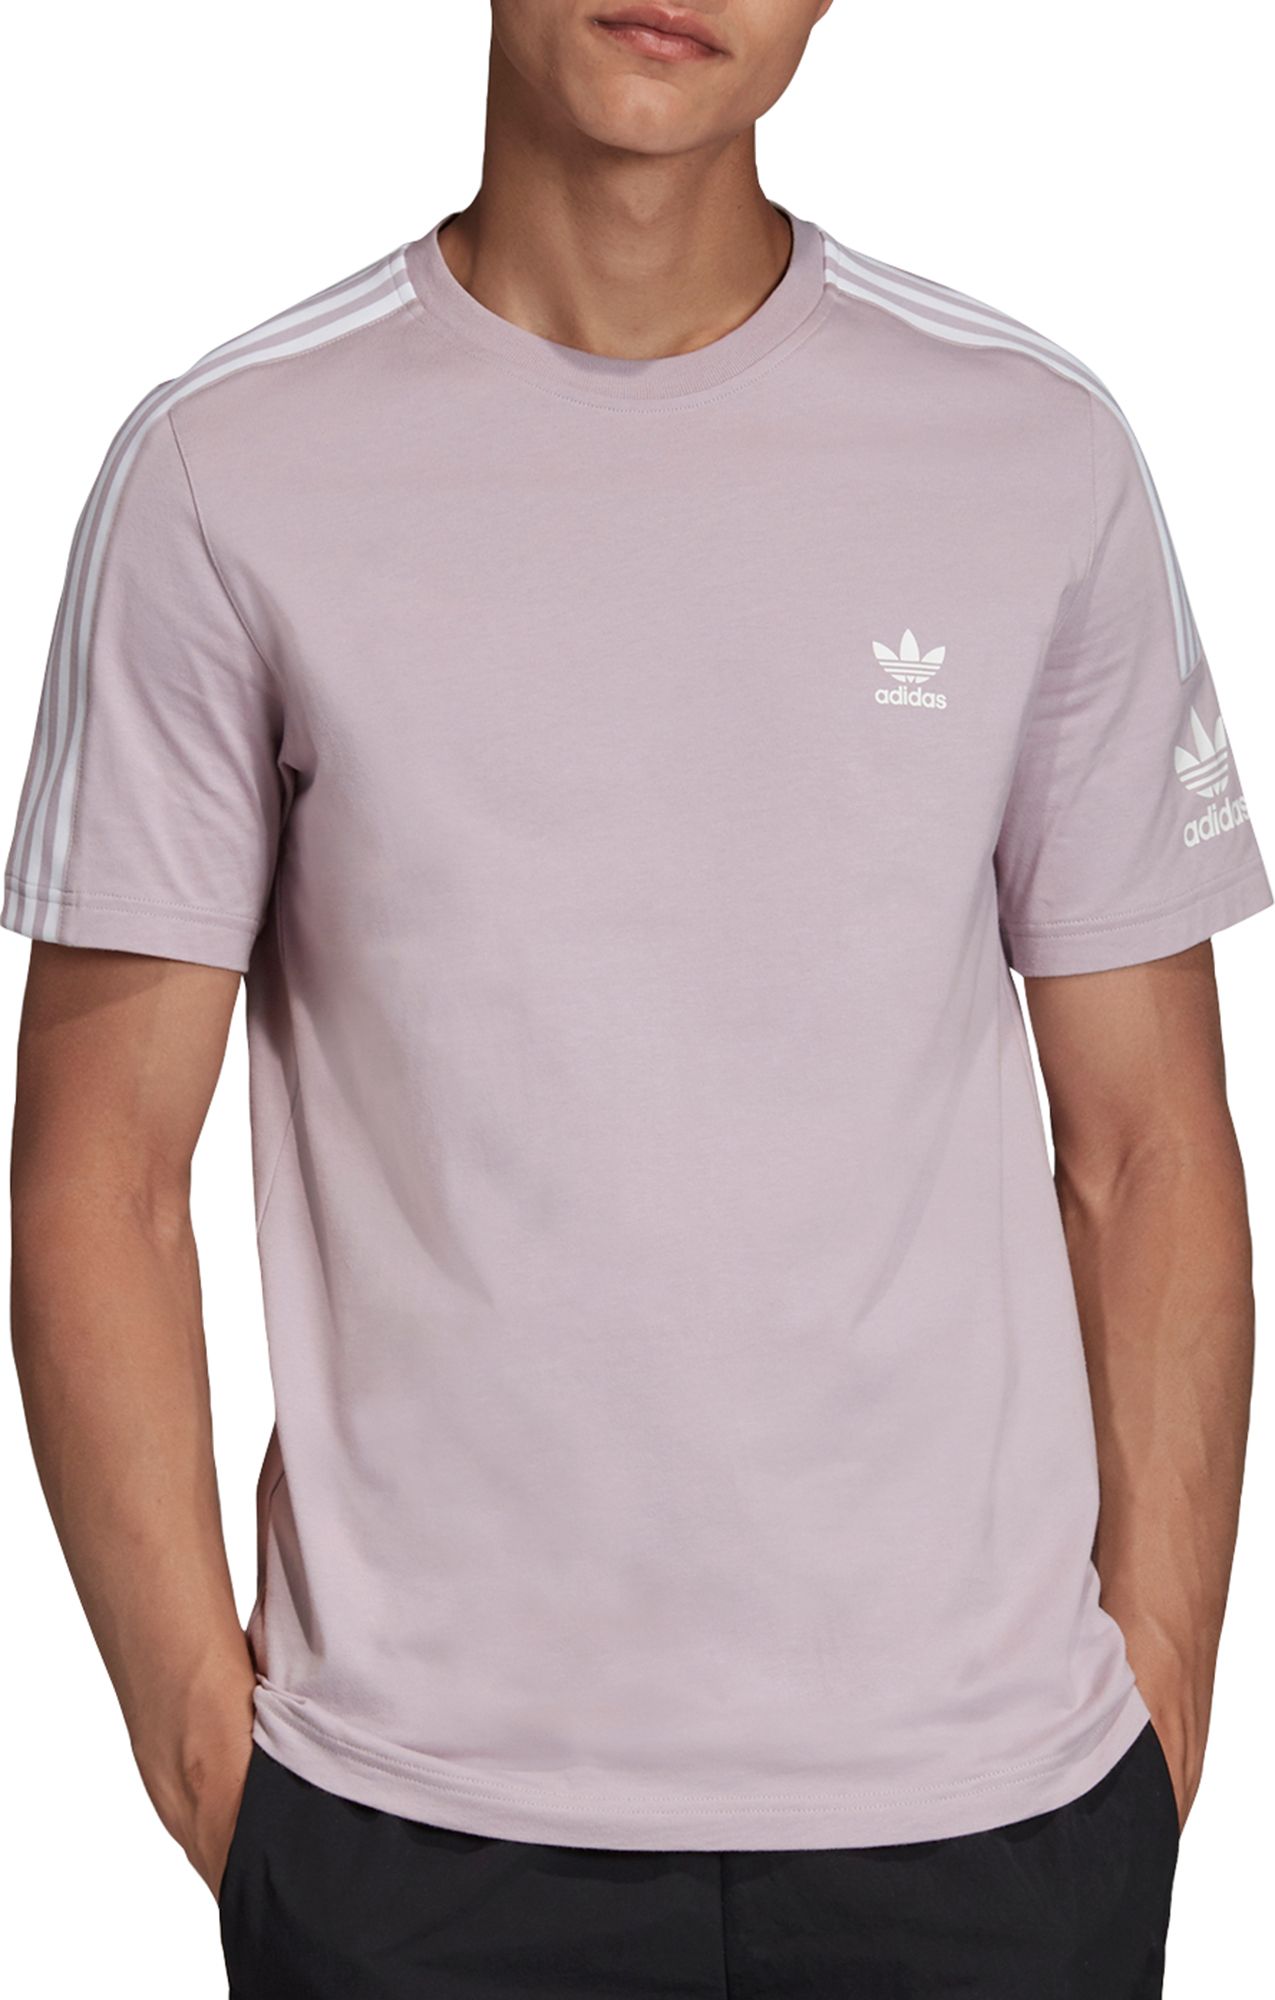 adidas Originals Men's AdiColor New Logo T-Shirt - .97